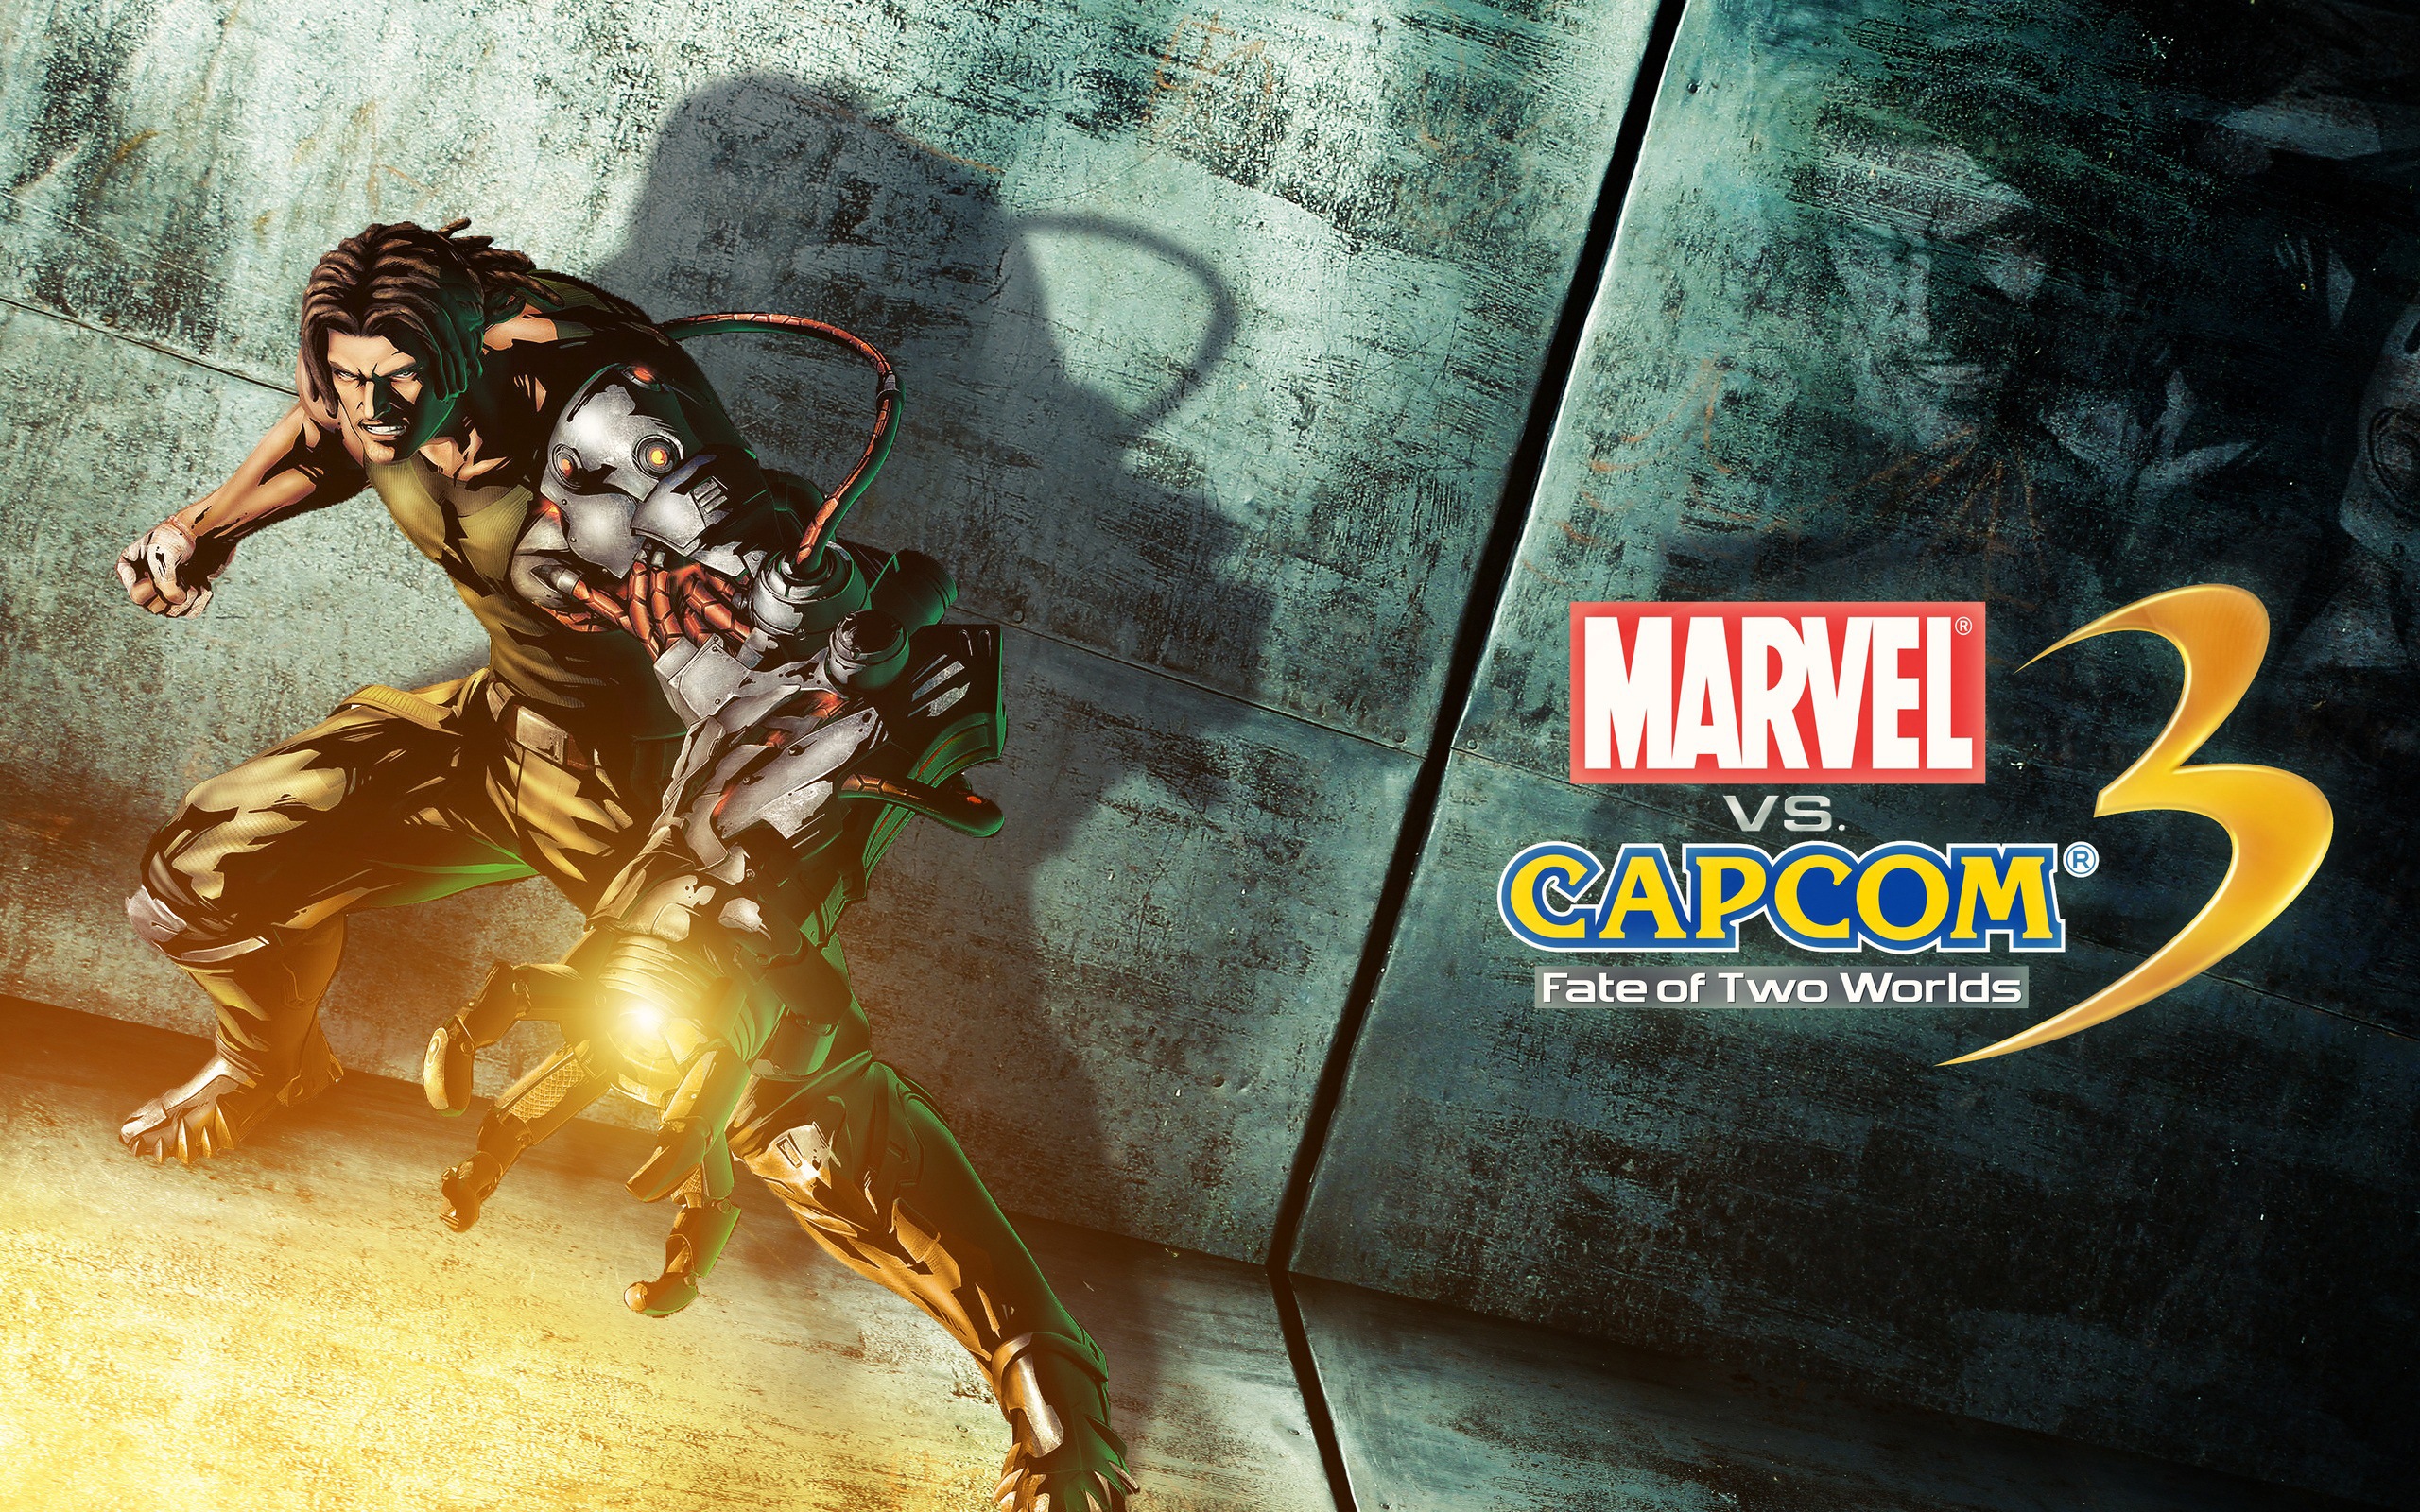 Marvel VS. Capcom 3: Fate of Two Worlds 漫画英雄VS.卡普空3 高清游戏壁纸8 - 2560x1600